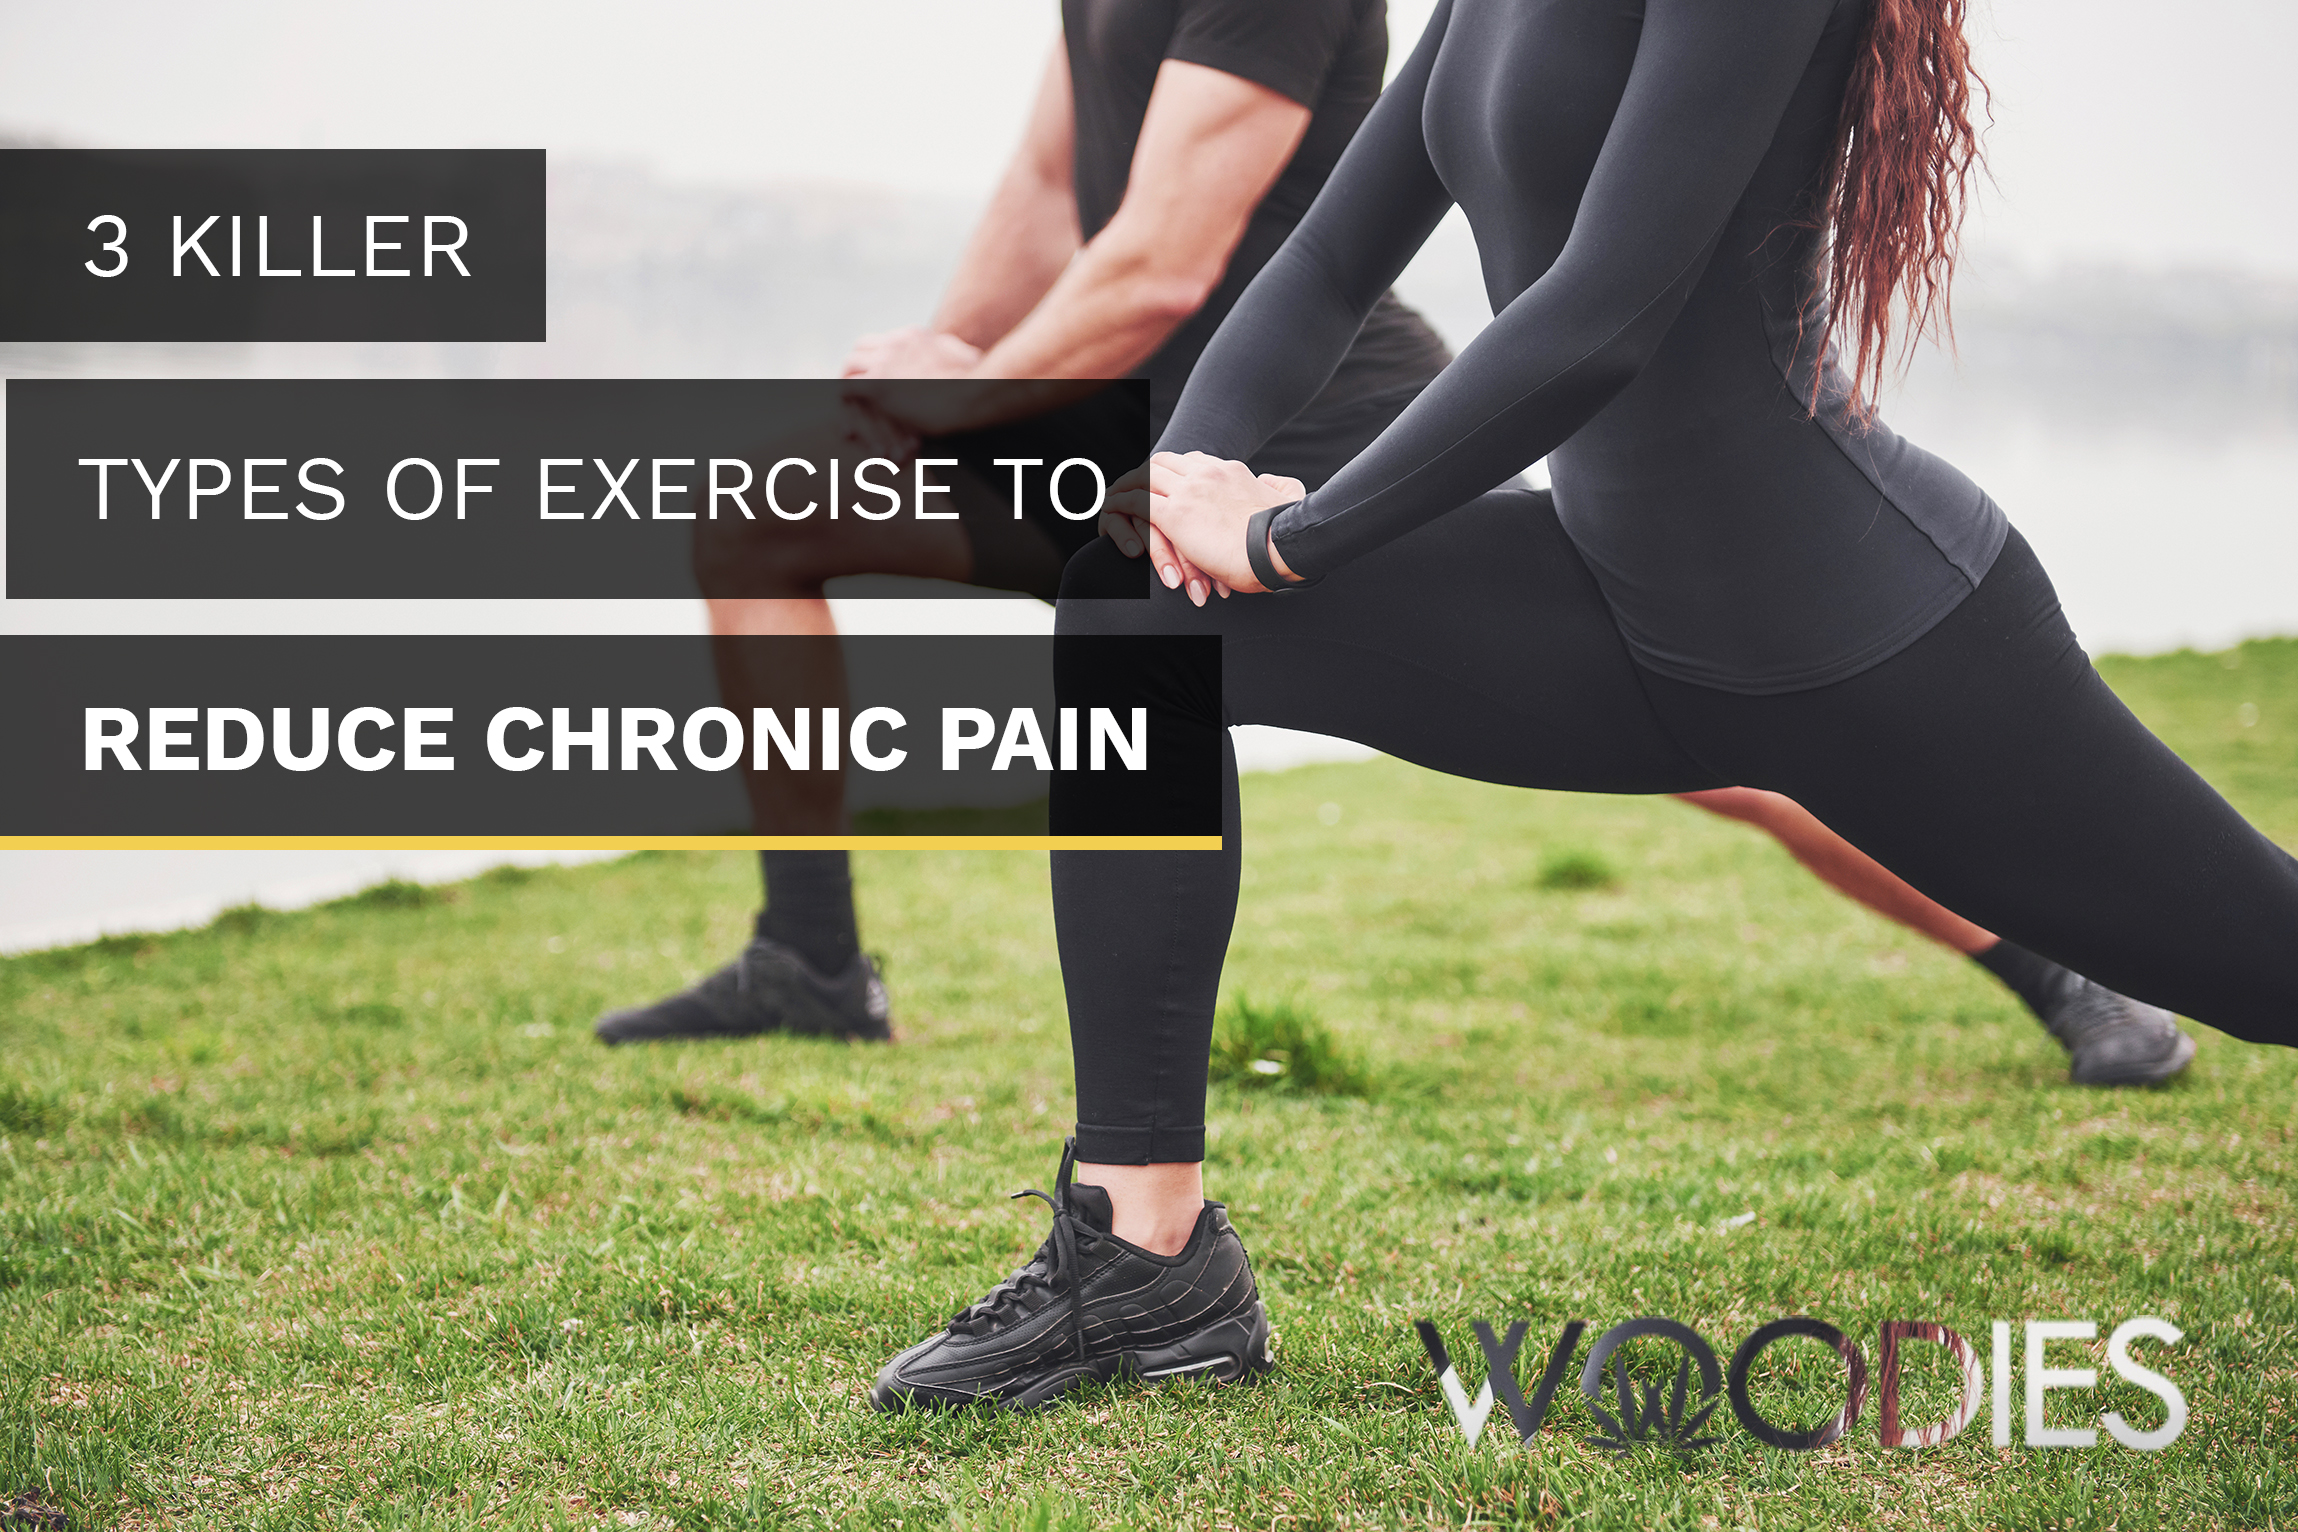 3 Killer Types of Exercise to Reduce Chronic Pain